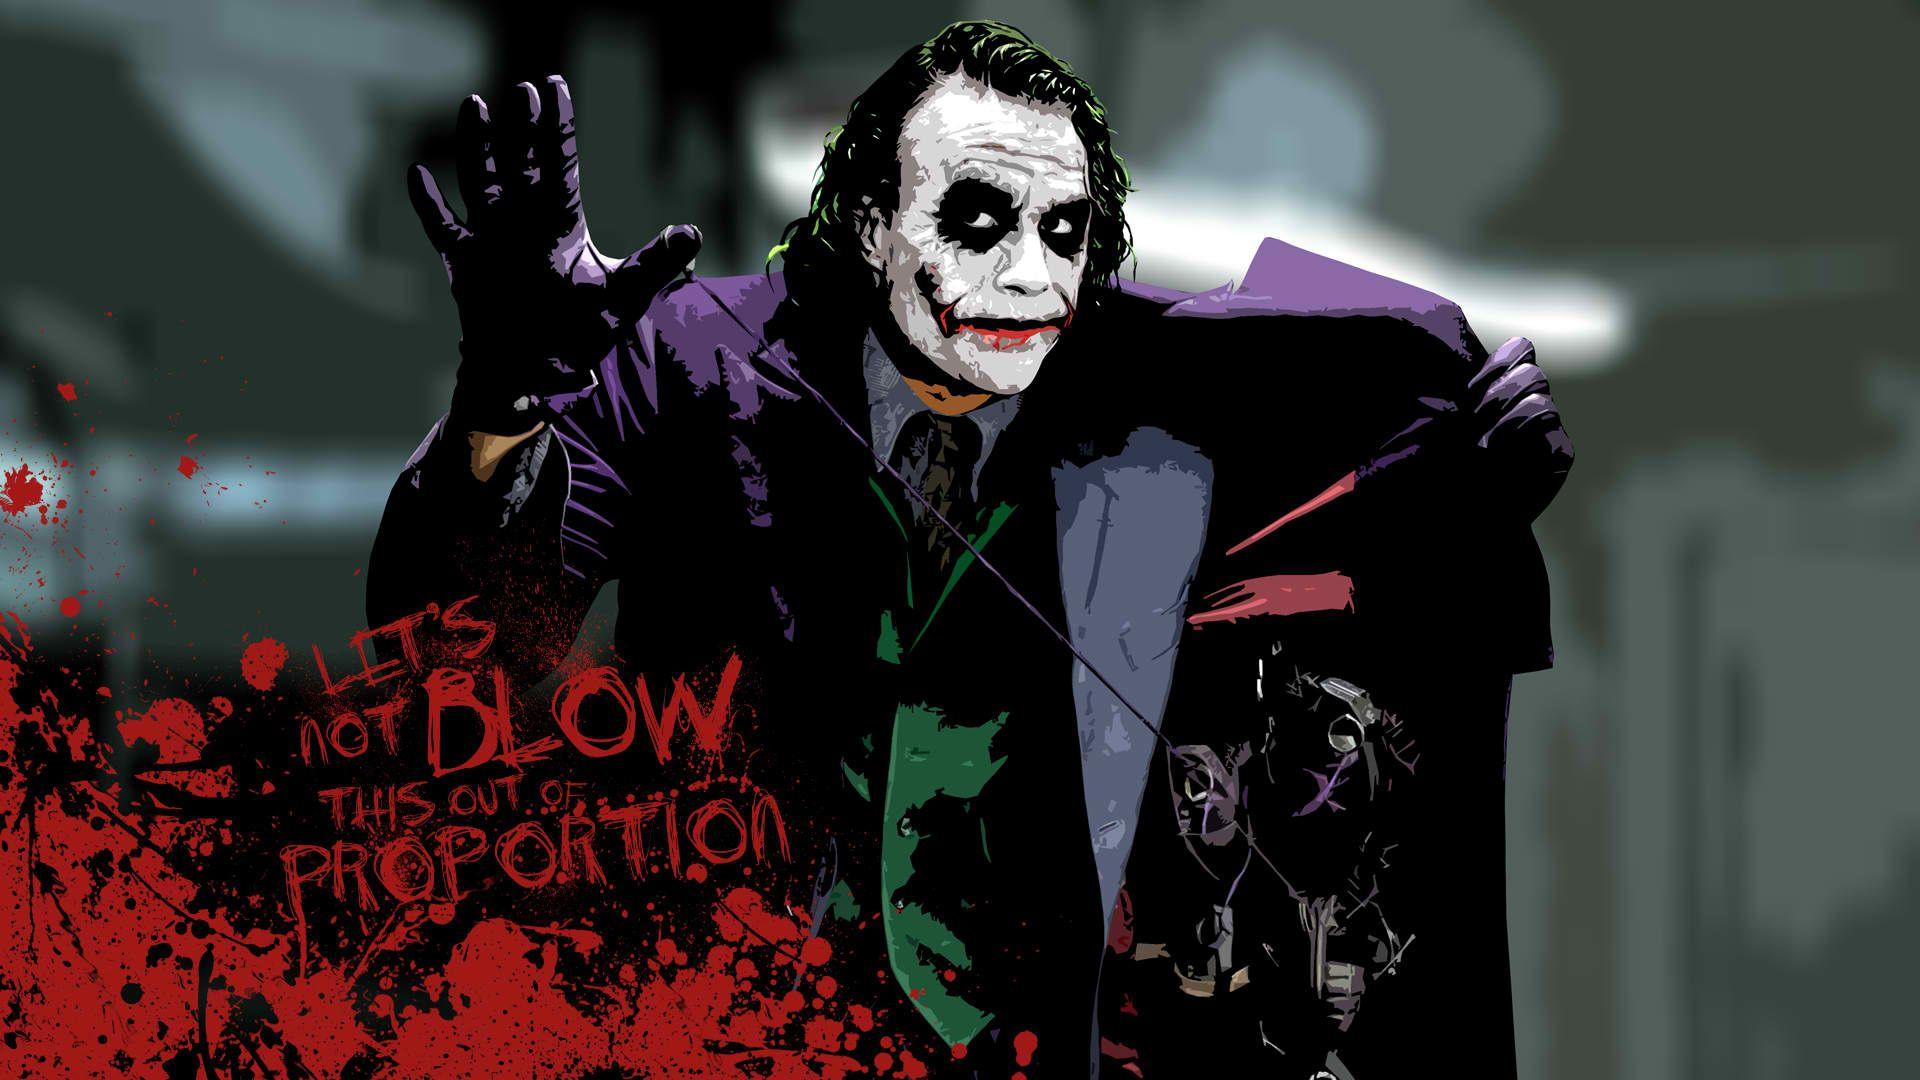 Batman The Dark Knight Joker HD wallpaper. movies and tv series